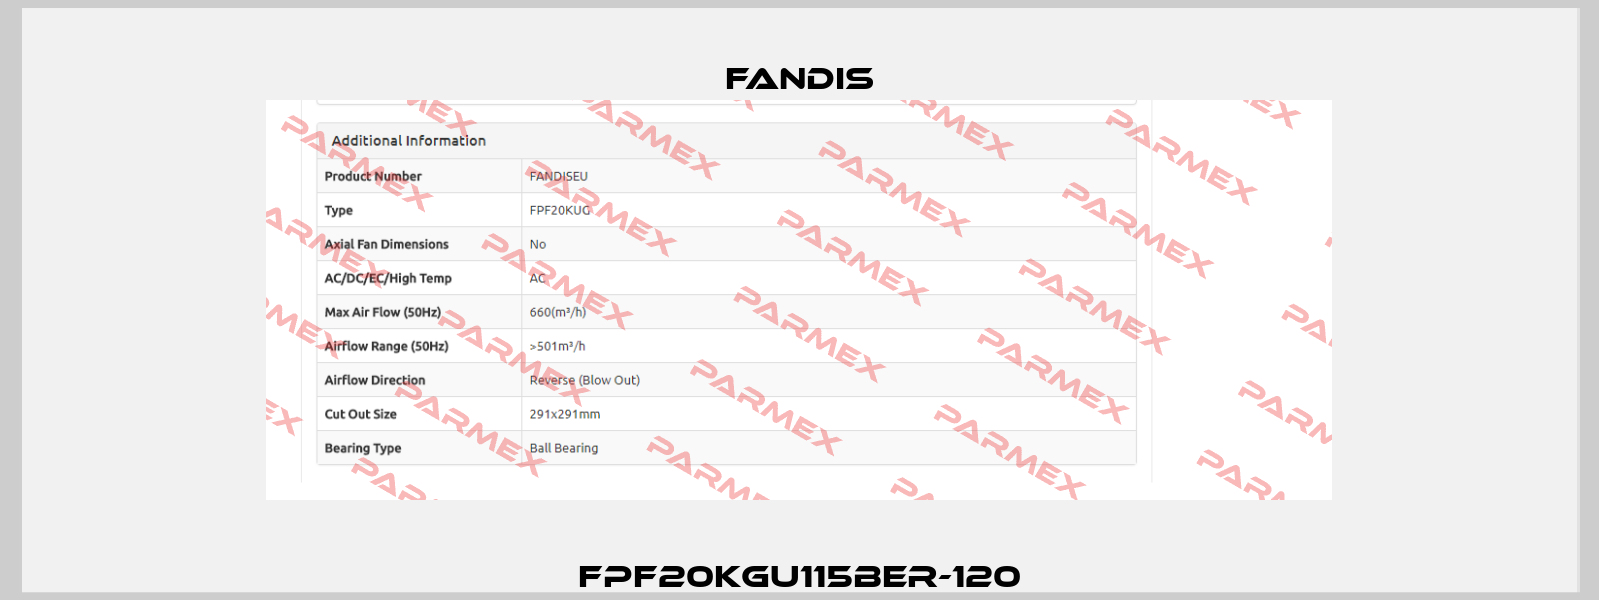 FPF20KGU115BER-120 Fandis